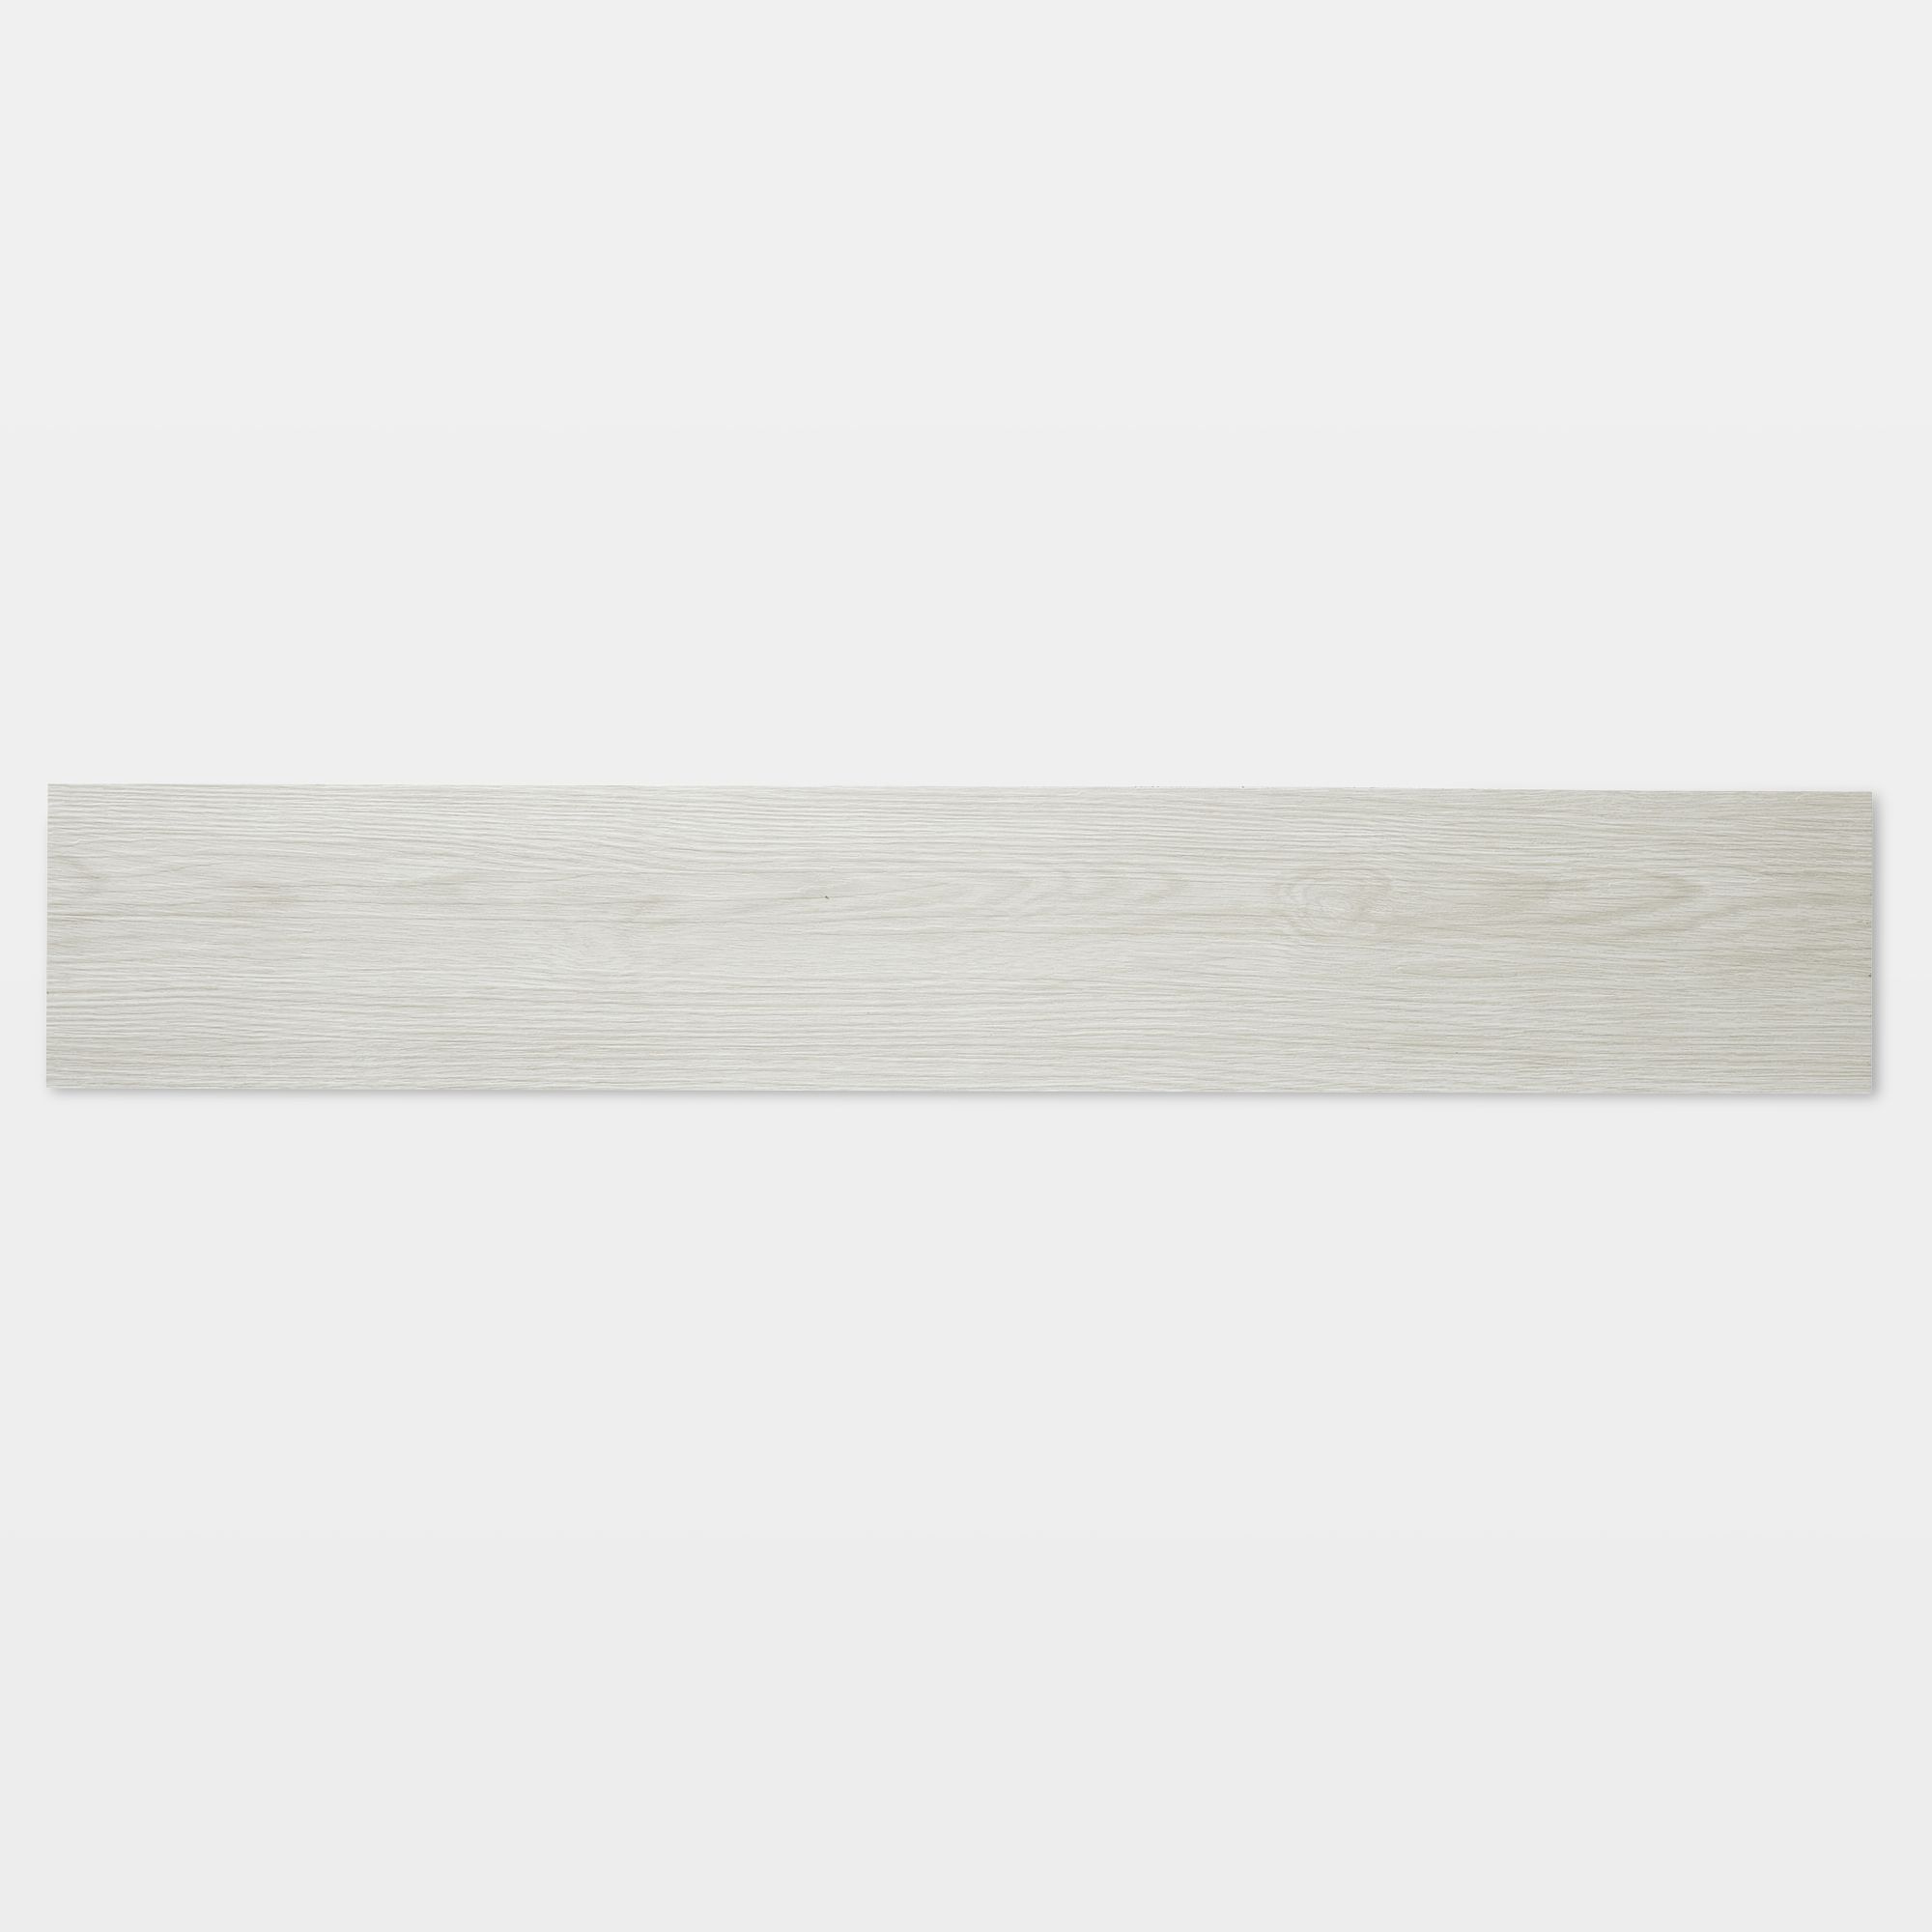 GoodHome Poprock White Wood planks Wood effect Self-adhesive Vinyl plank, Pack of 7